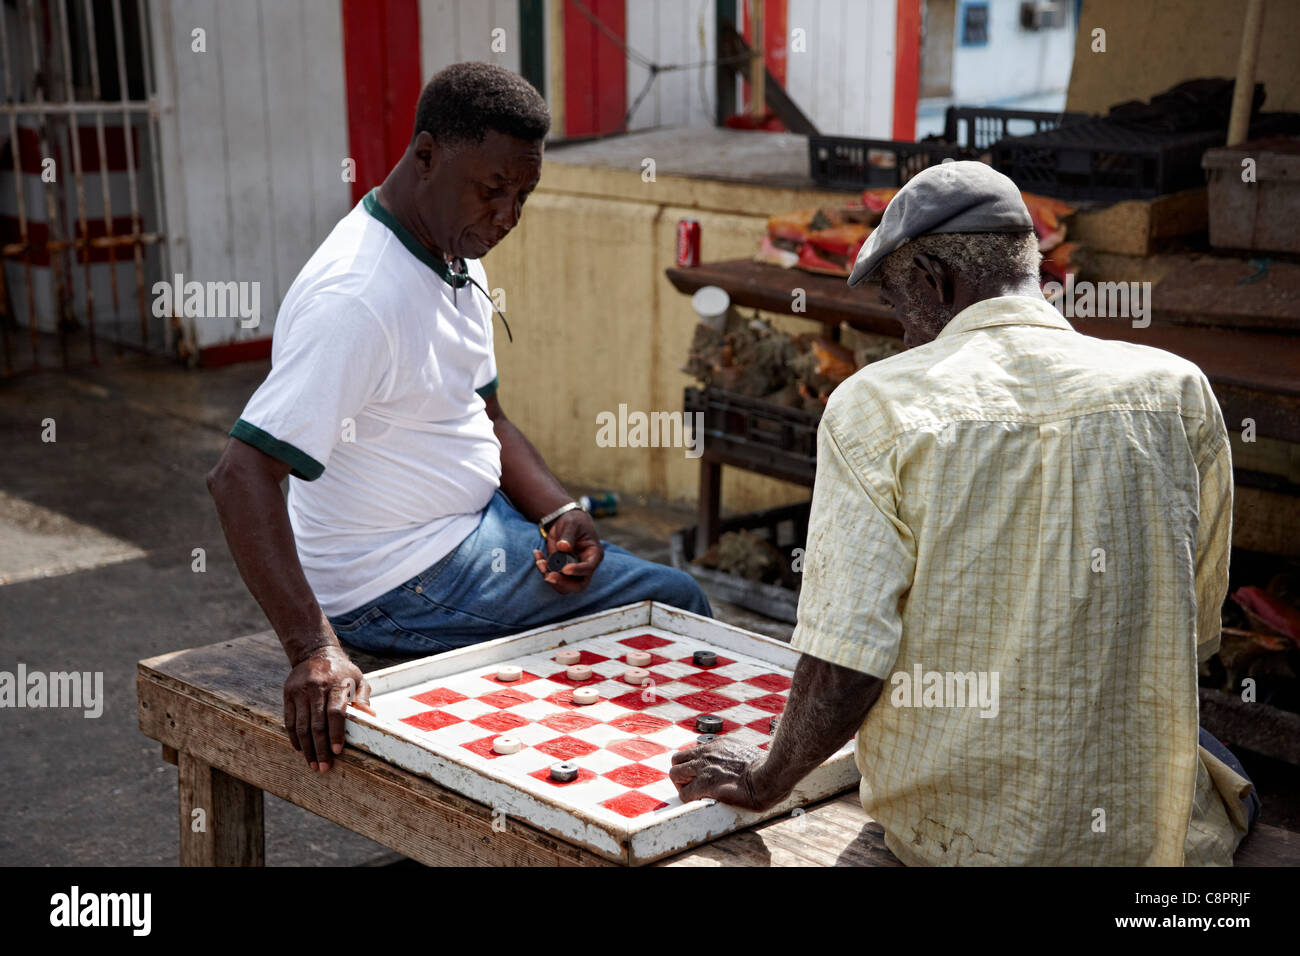 Playing checkers on the streets of Nassau. New Providence Island, Bahamas, Caribbean Stock Photo